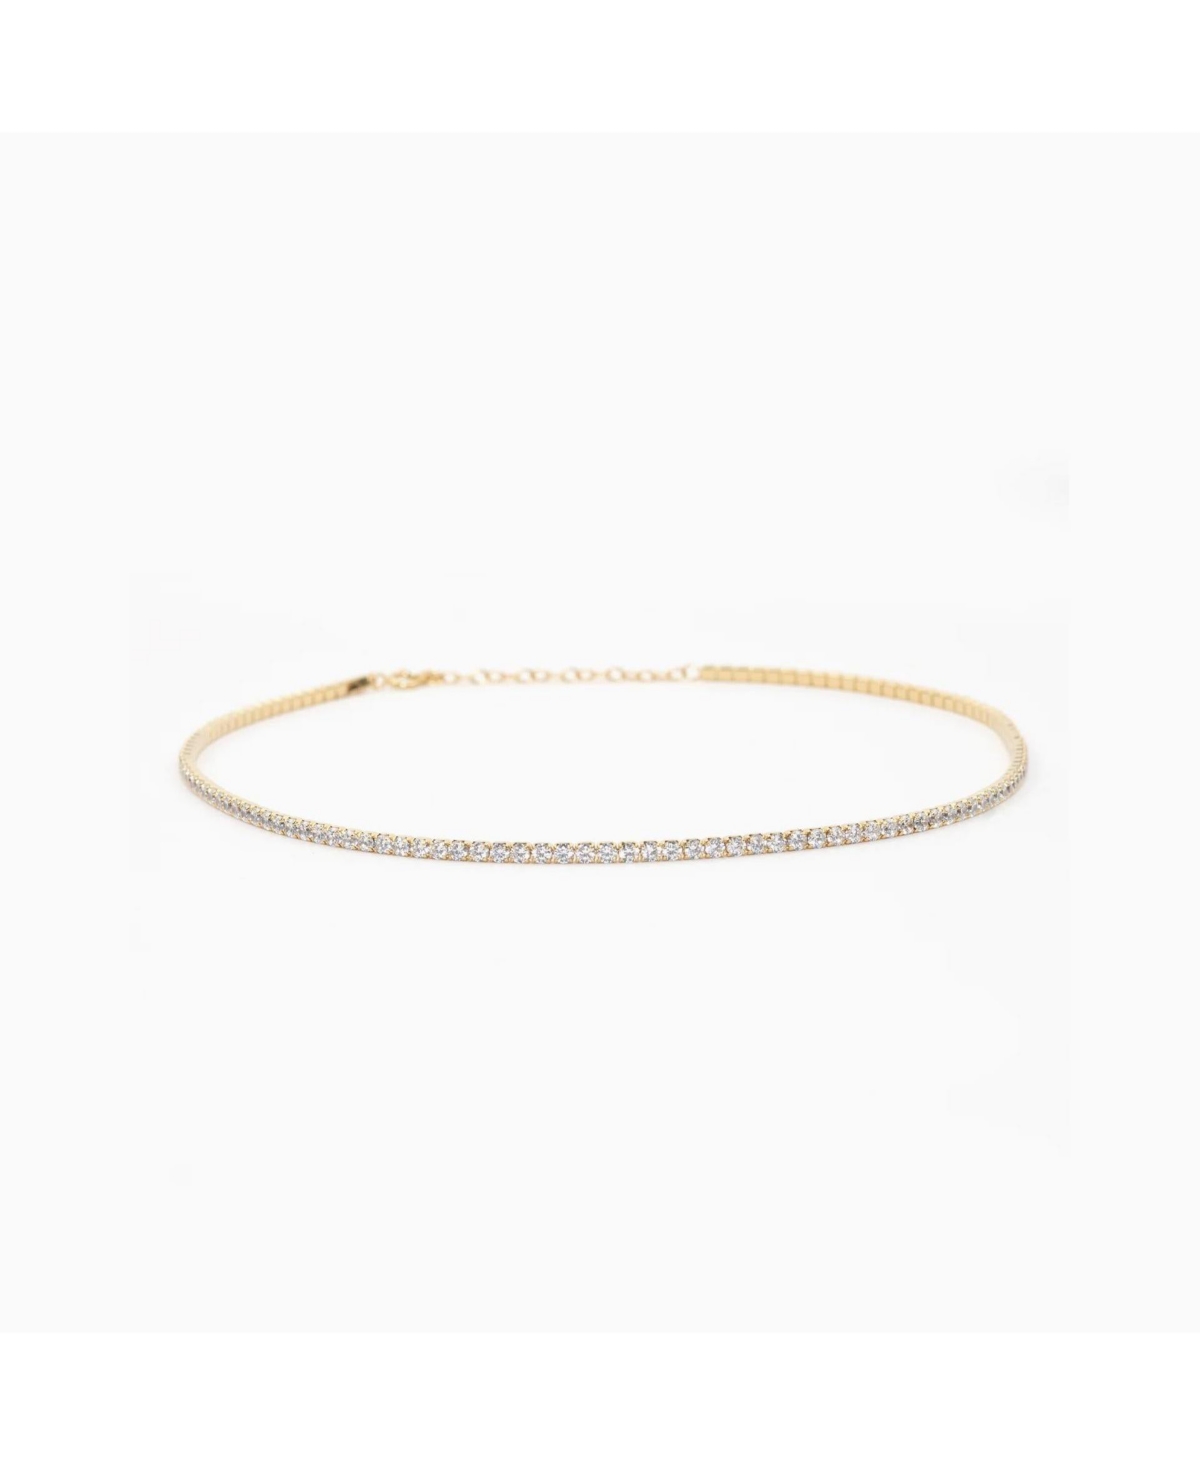 Cherie Tennis Necklace - Gold